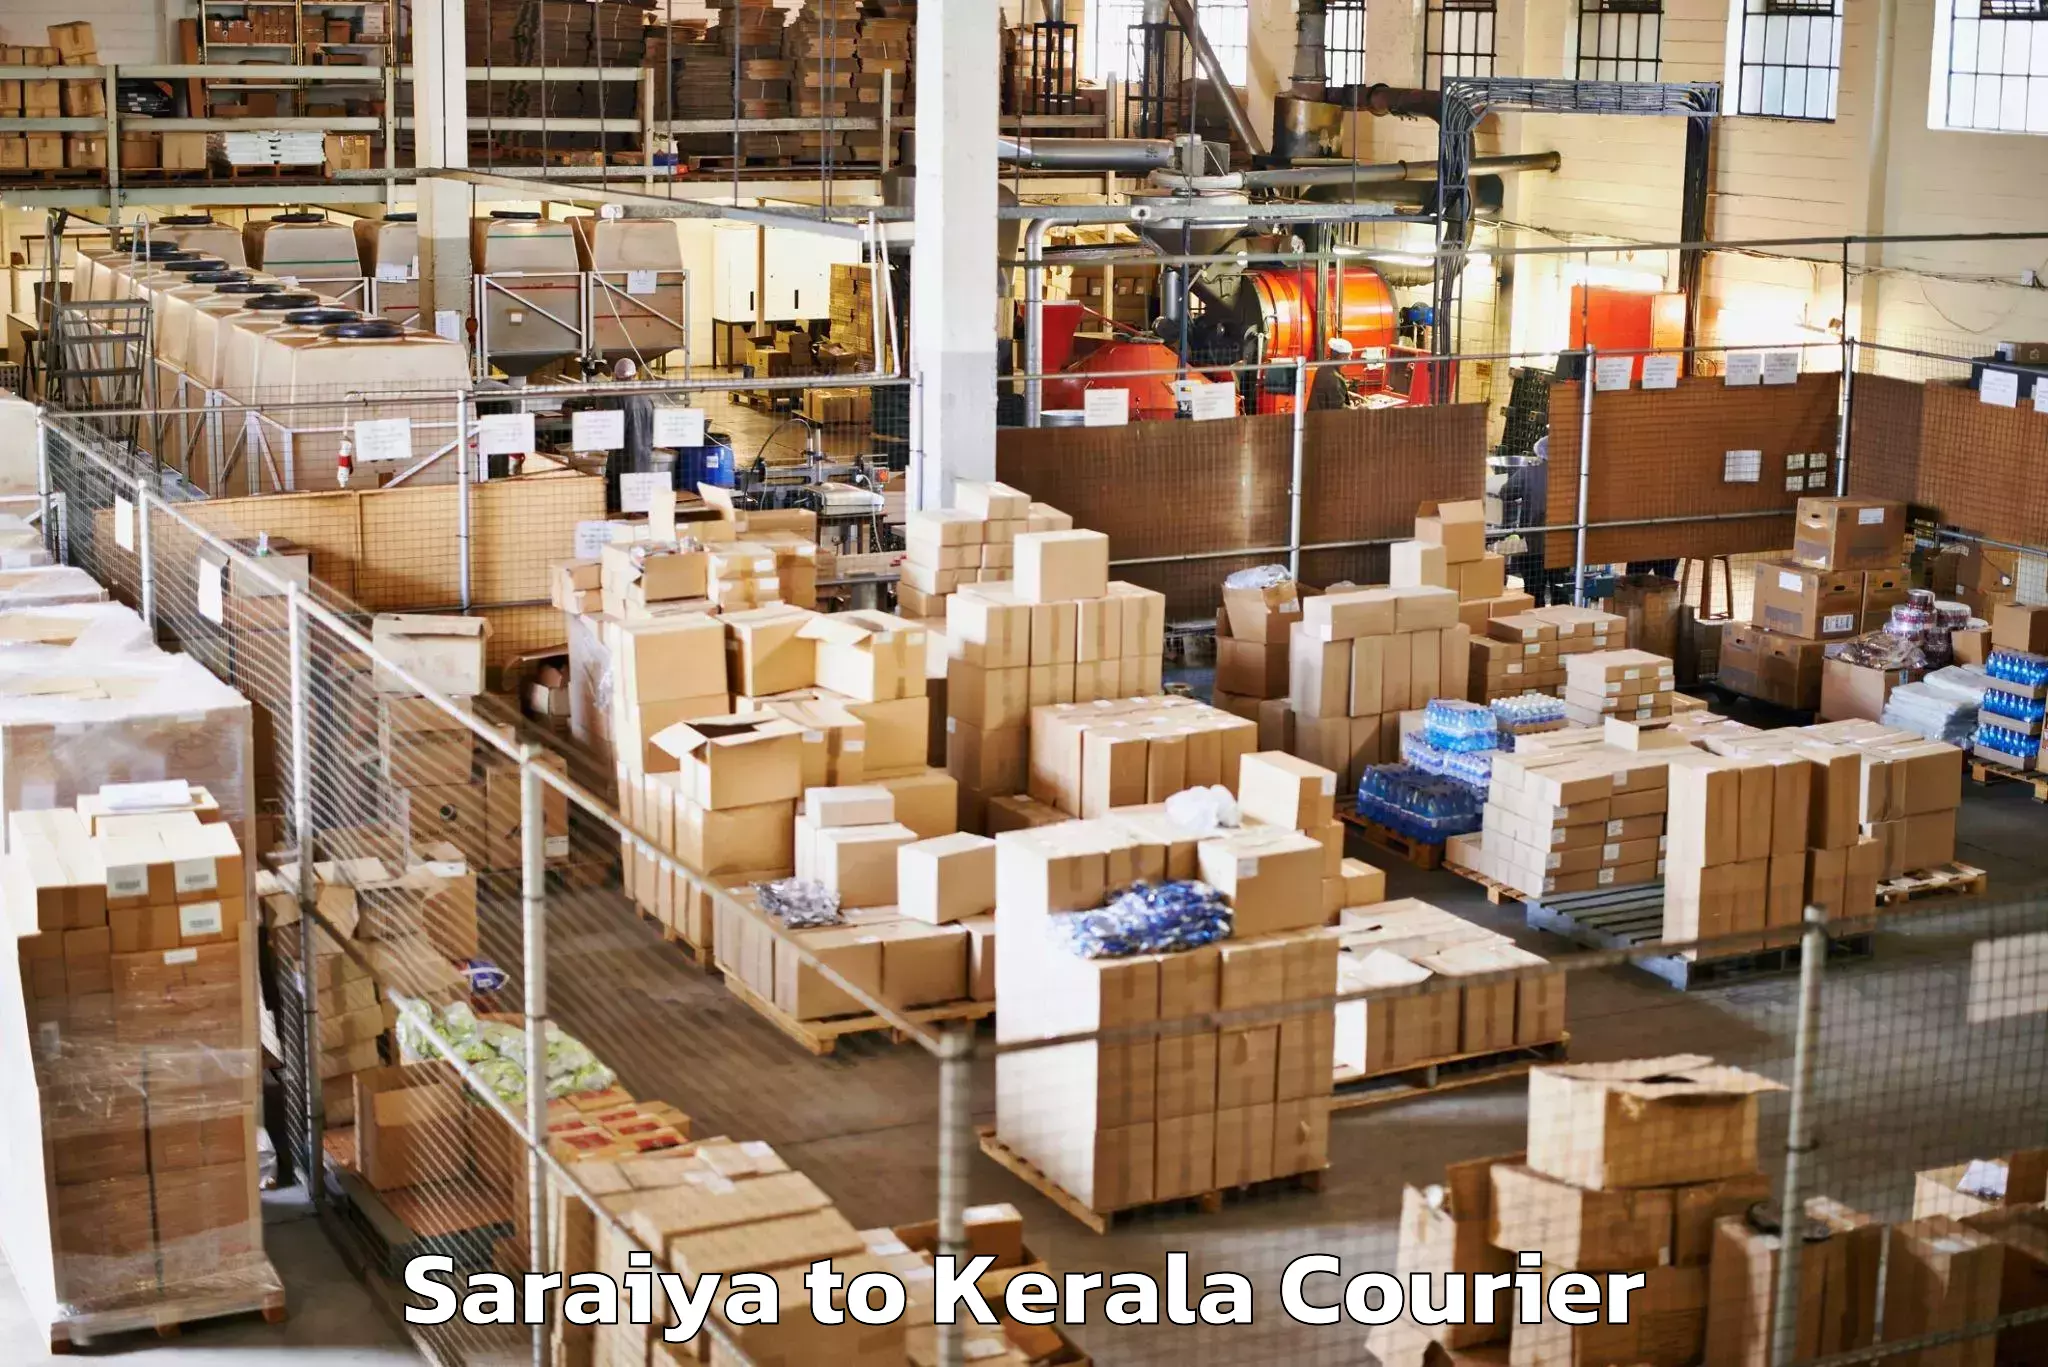 Same day luggage service Saraiya to Kerala